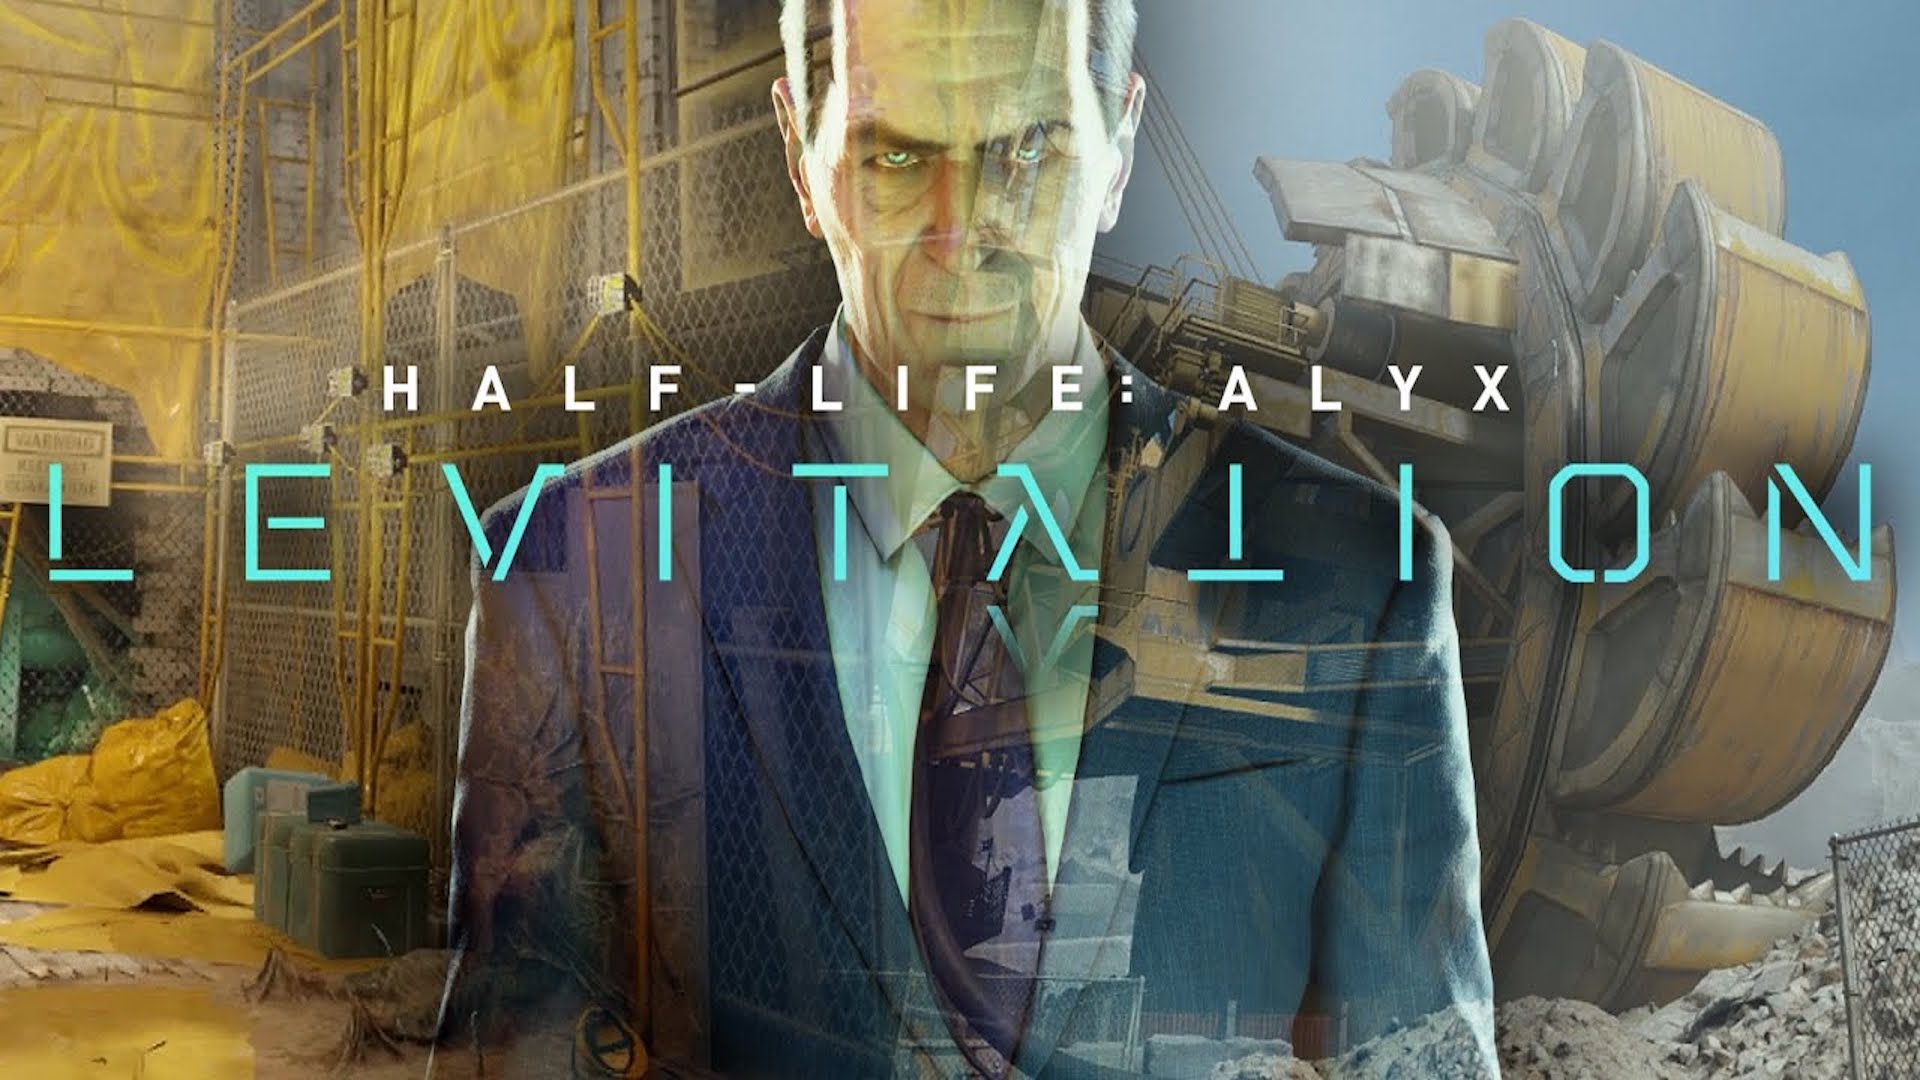 Story mod "Levitation" breathes new life into "Half-Life: Alyx"